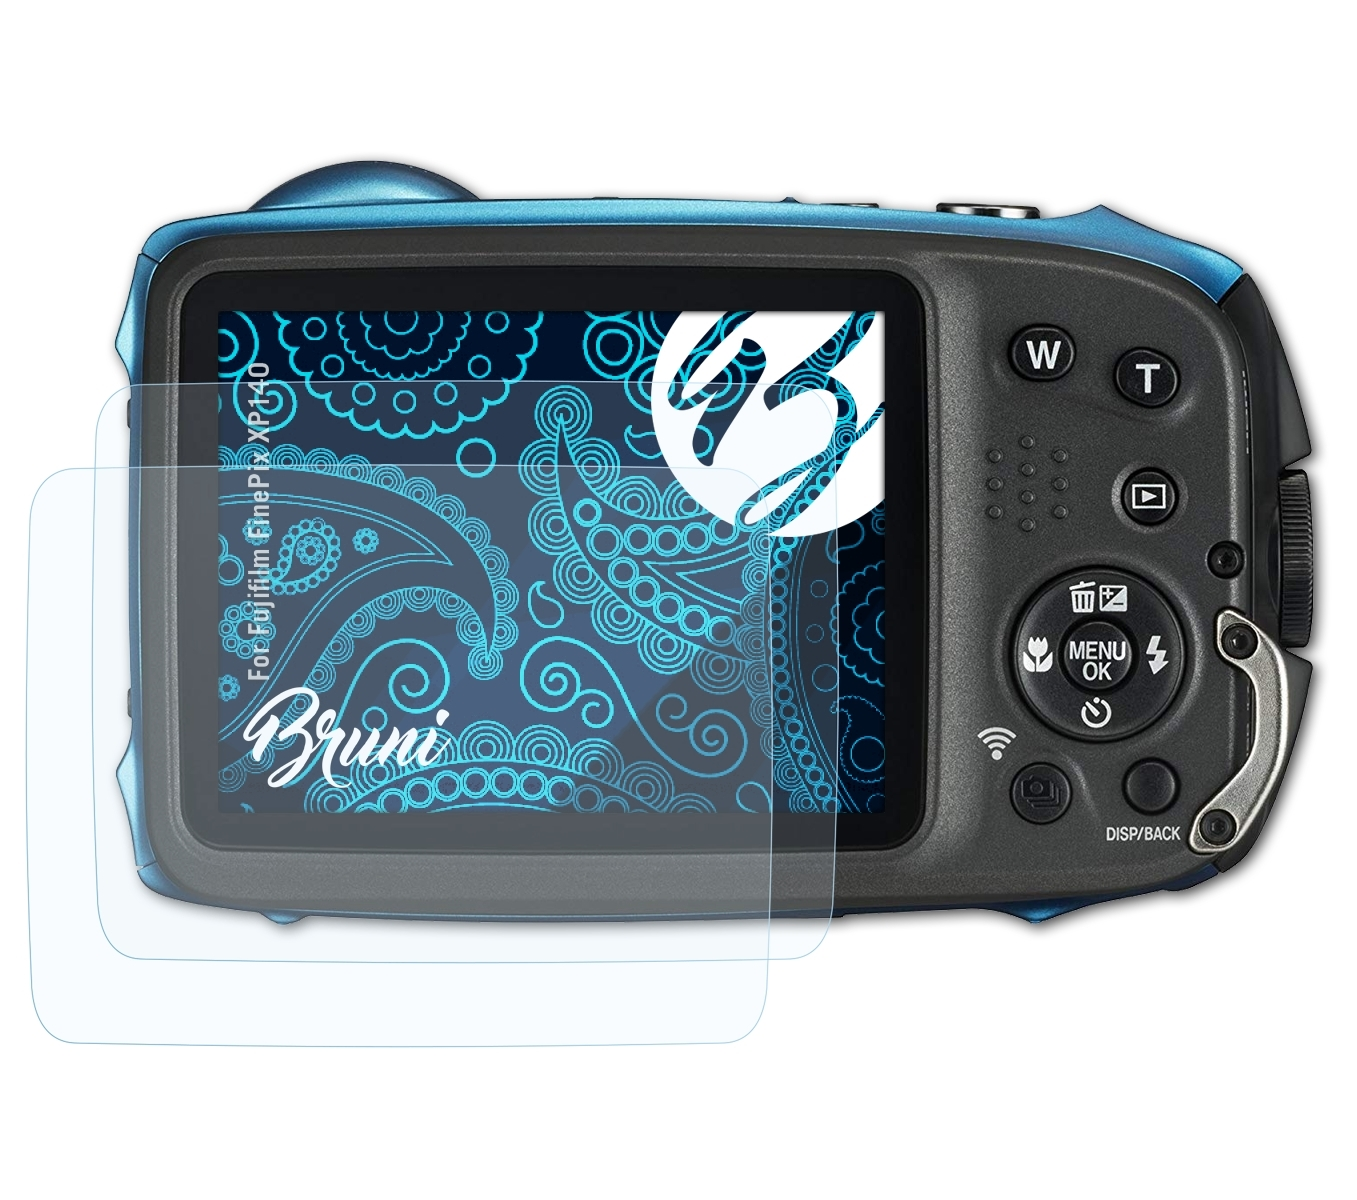 BRUNI 2x XP140) Basics-Clear Schutzfolie(für Fujifilm FinePix